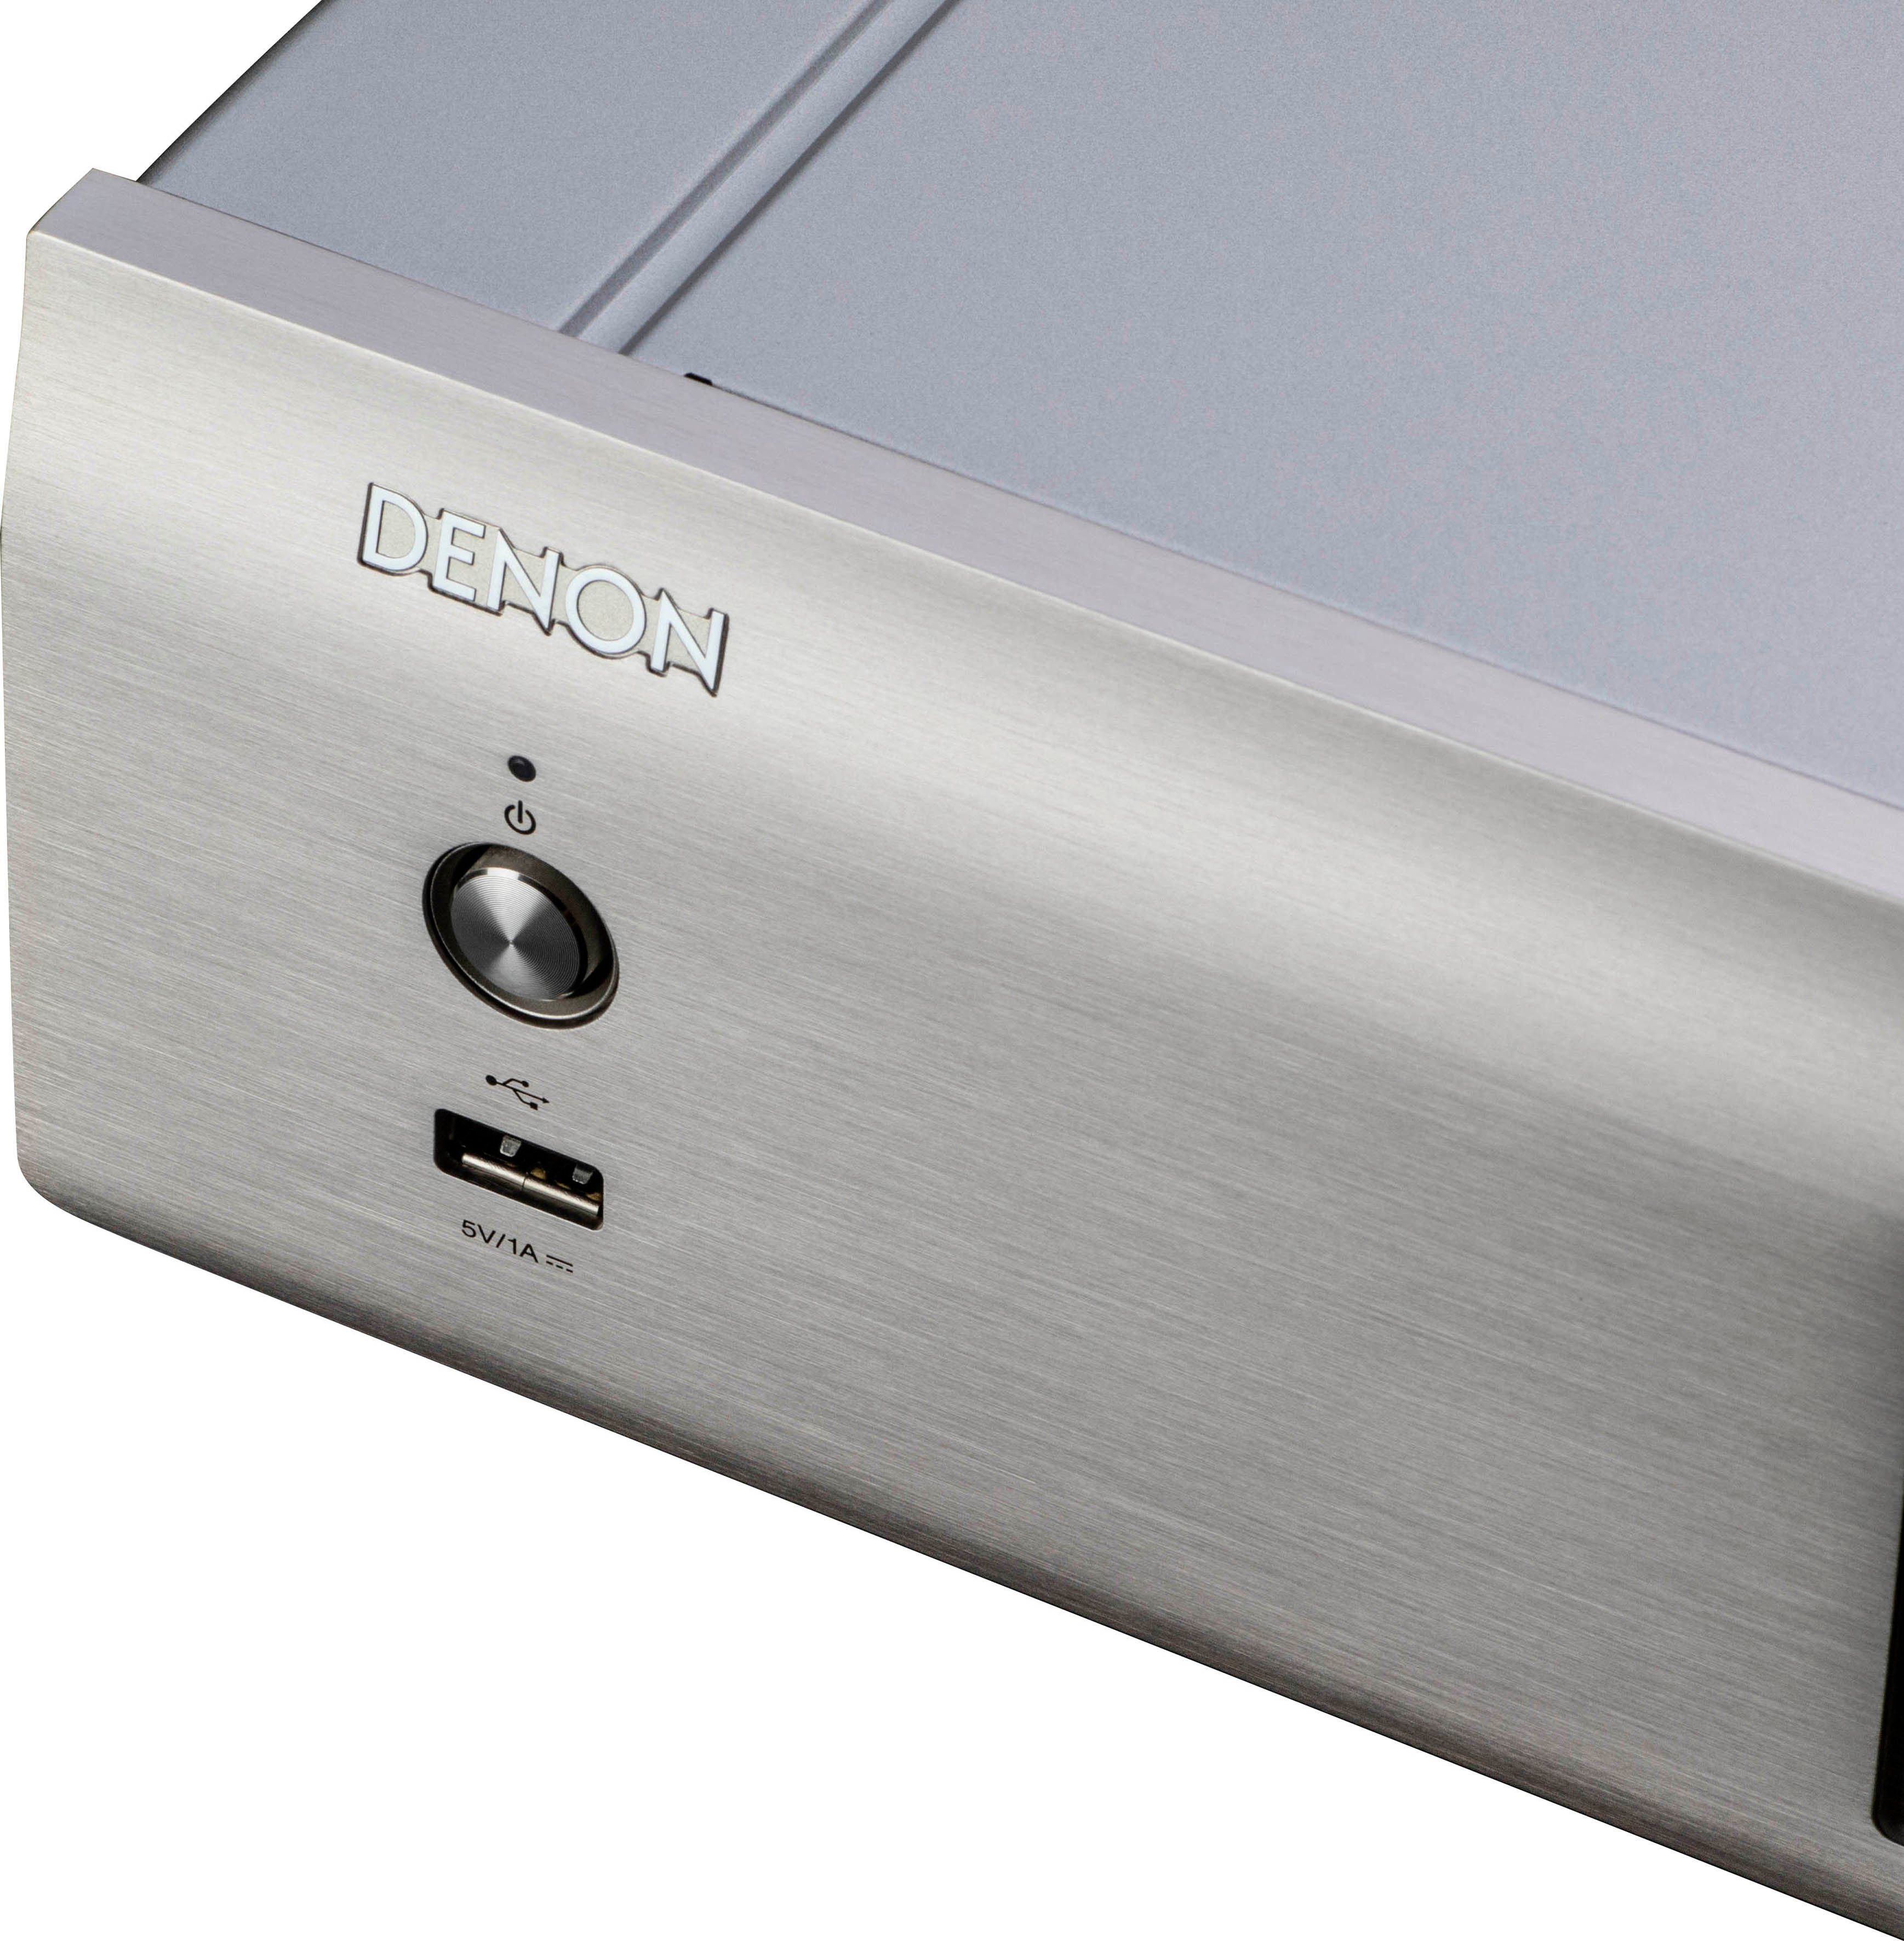 DCD-900NE Denon CD-Player (USB-Audiowiedergabe) silber